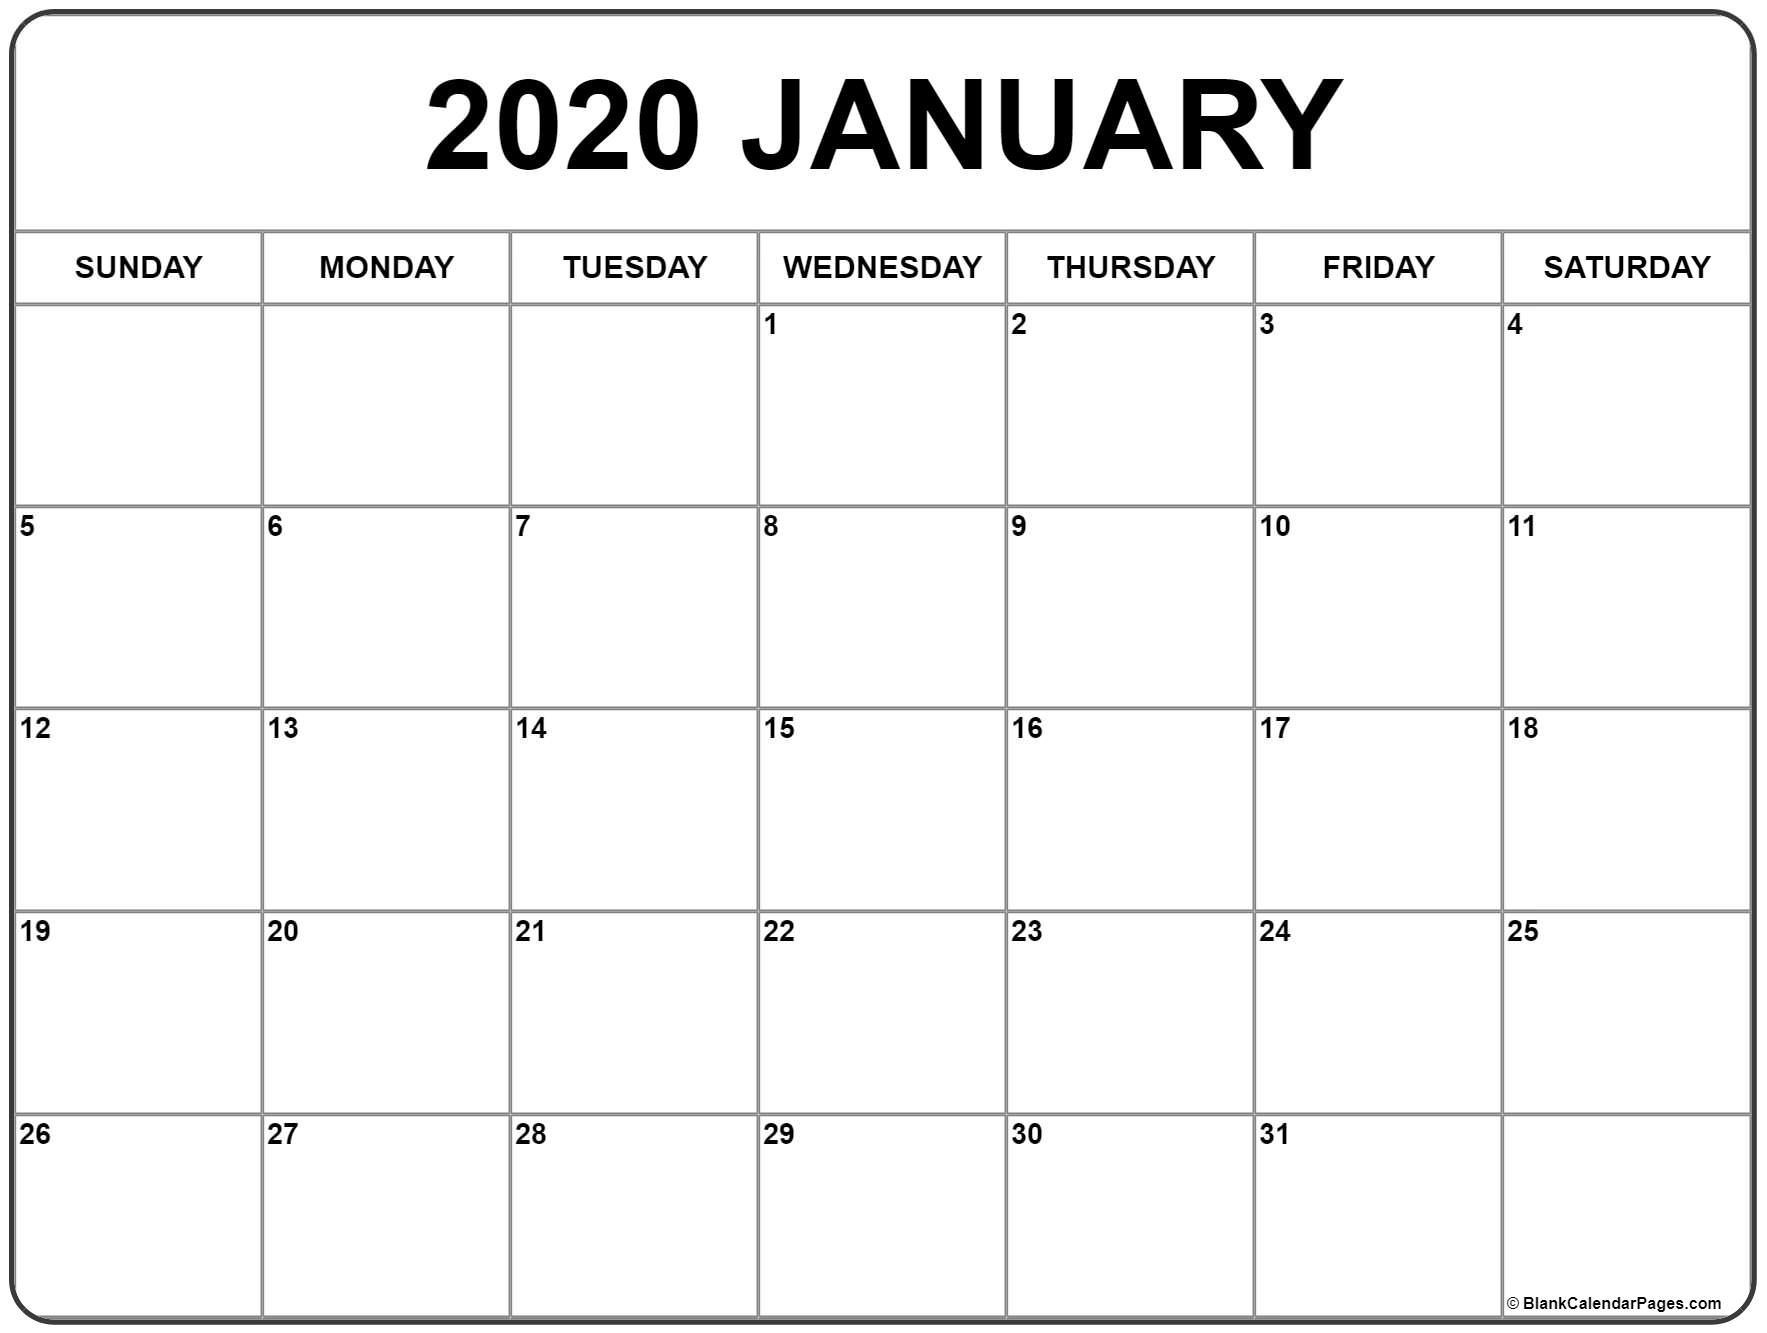 January 2020 Calendar | Free Printable Monthly Calendars-Editable January 2020 Calendar